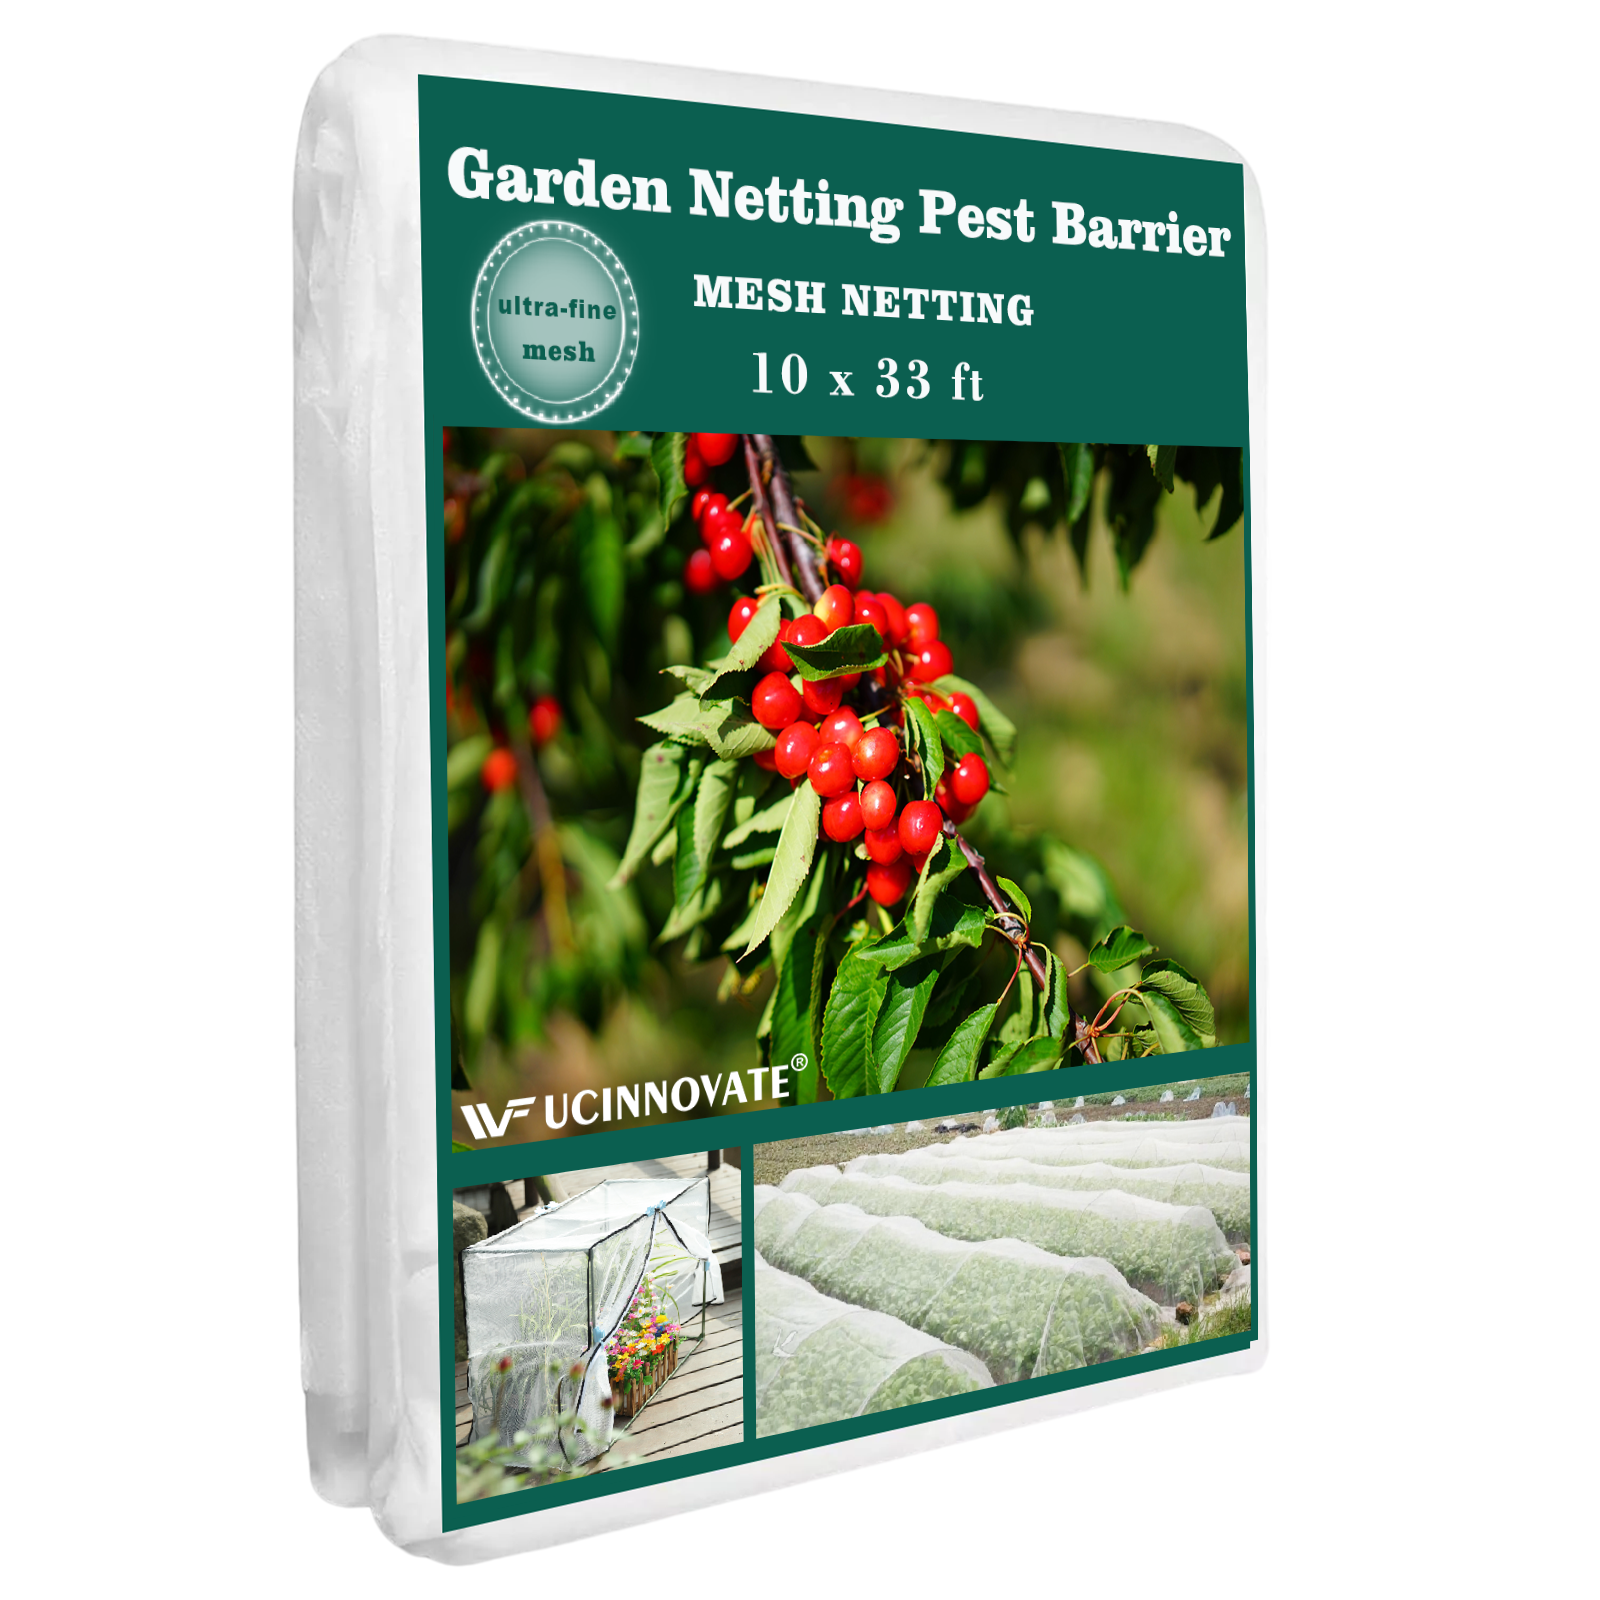 UCINNOVATE 10 x 33 ft Ultra-fine Garden Mesh Netting Pest Barrier Plant Protector Screen Net